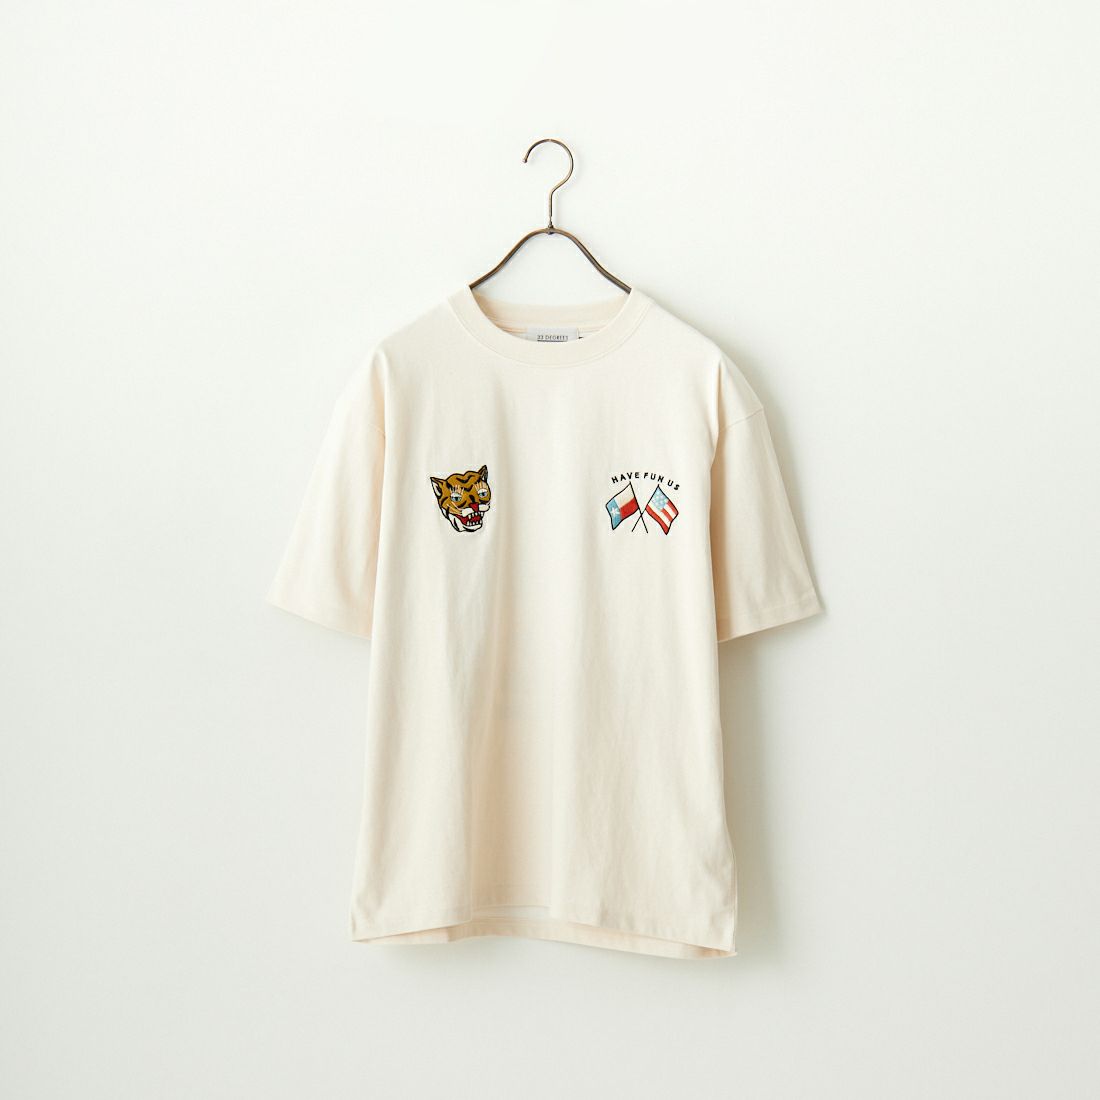 33Degrees [サーティスリーディグリーズ] 刺繍Tシャツ [TDR-242-021] 06 OFFﾄﾗ